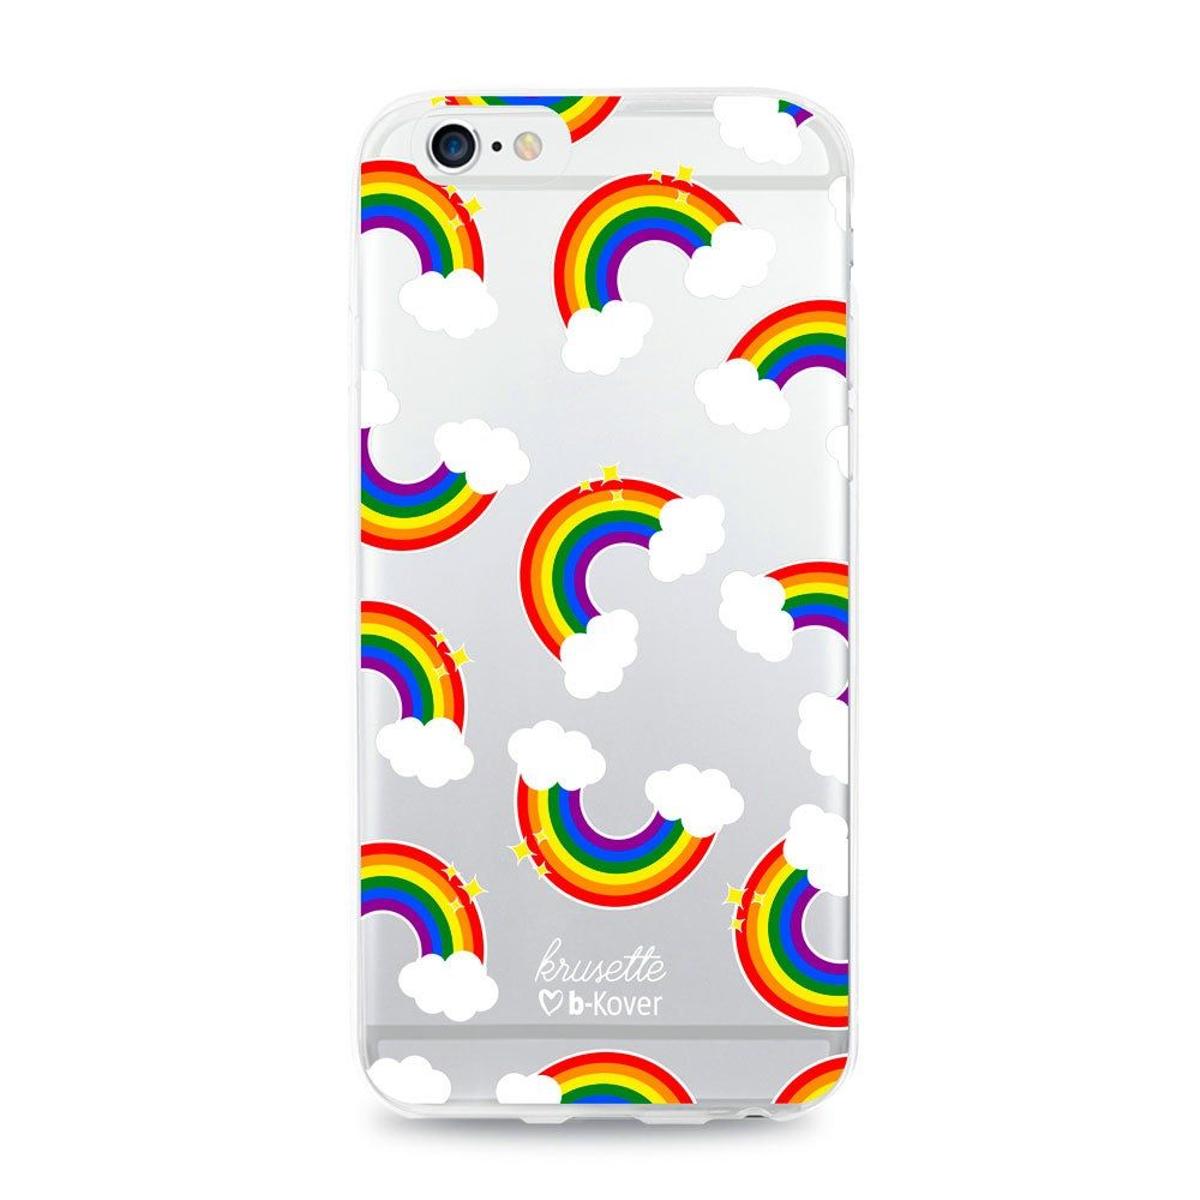 Funda de móvil transparente con dibujos de arcoíris de KRUSETTE X B-KOVER. (Precio: 14,99 euros)